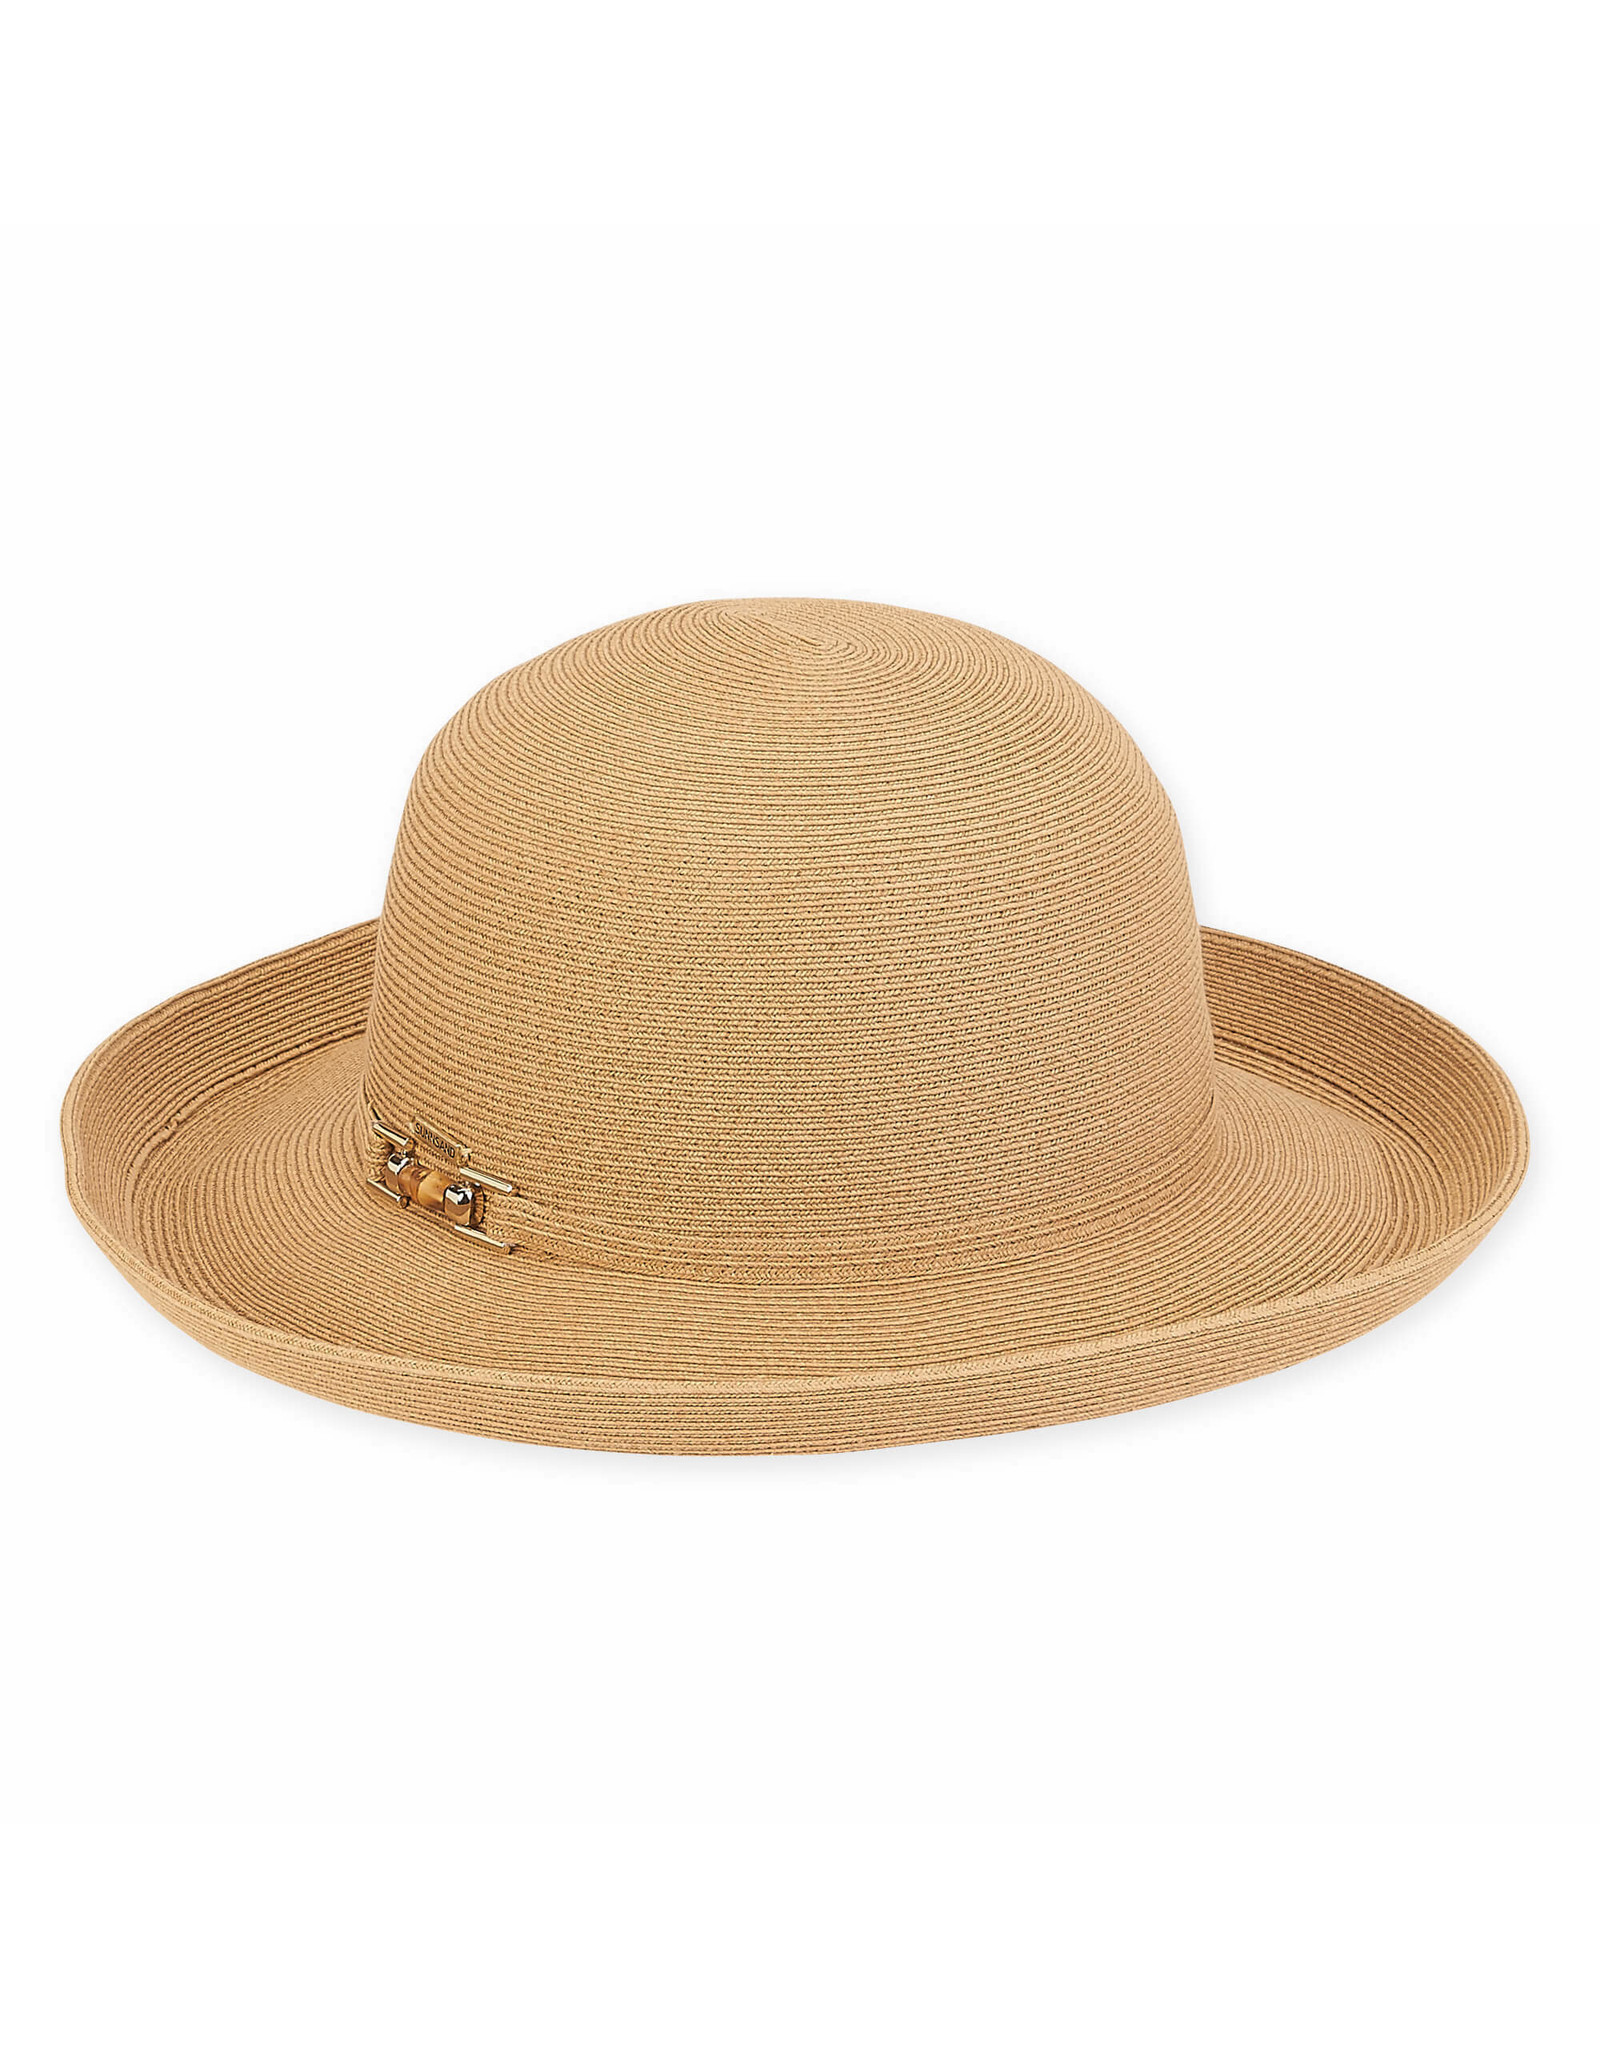 Sun N Sand Women's Hats Premium Paper Braid Up Brim - Tan